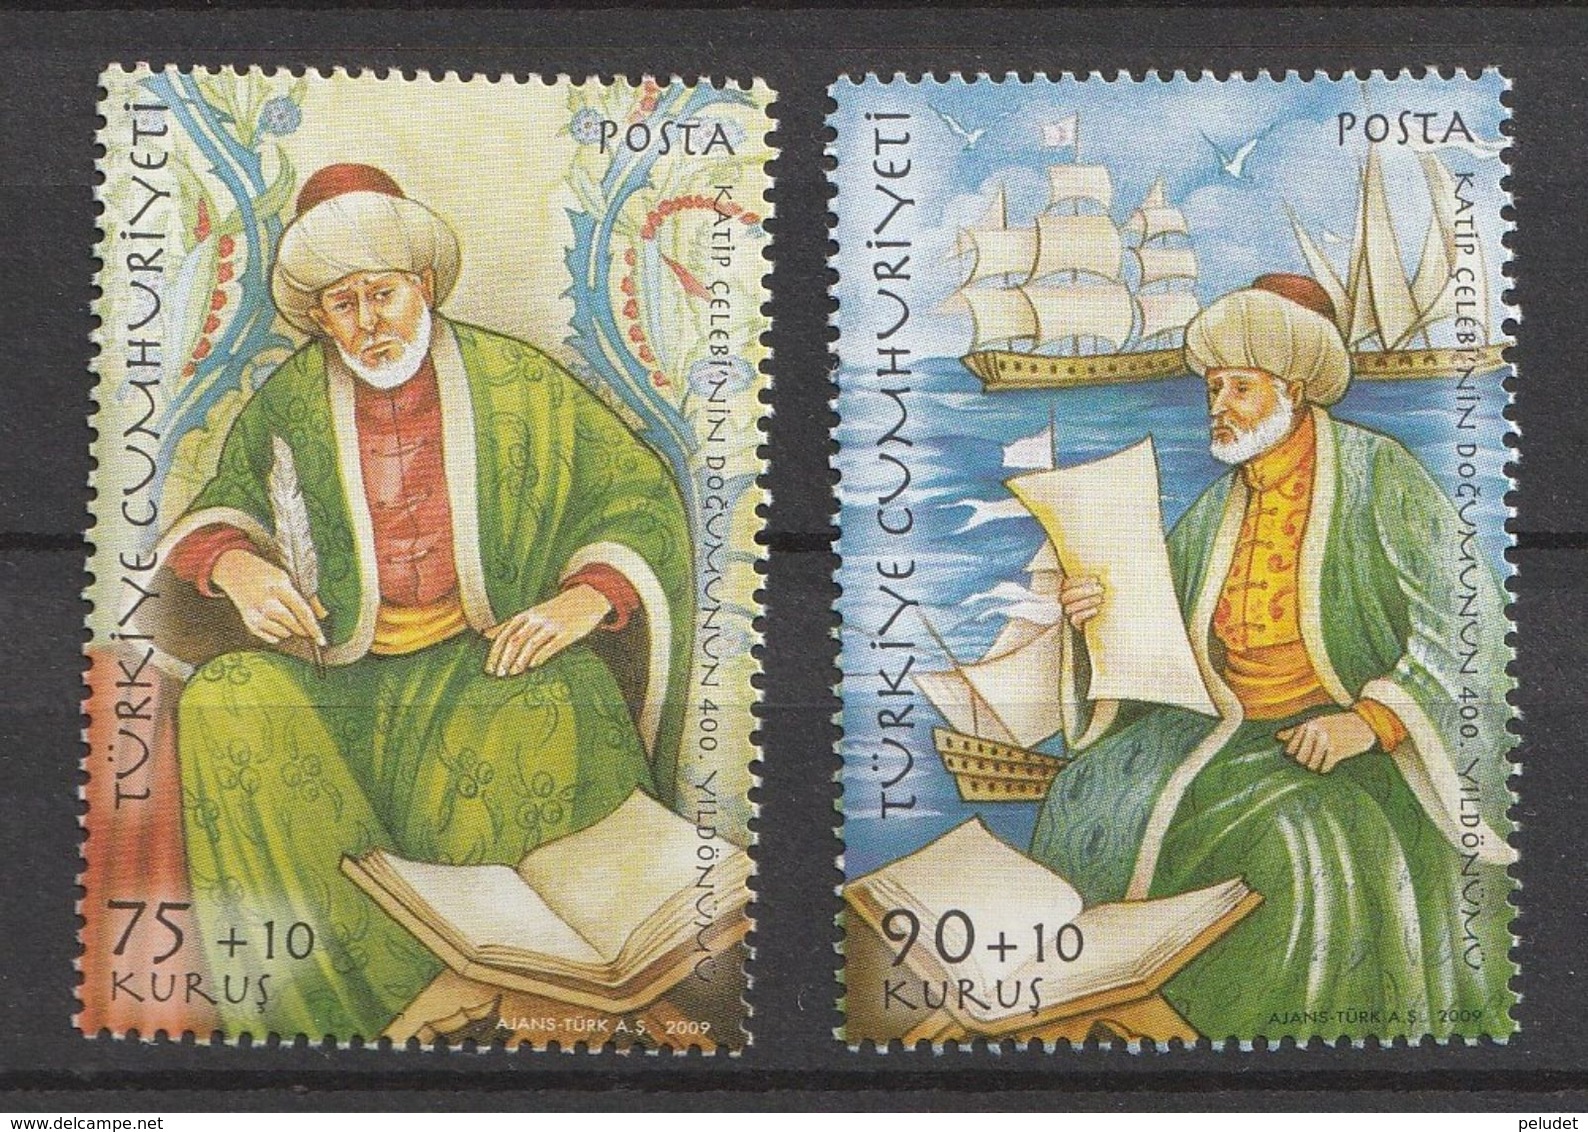 Turkey 2009, Katip Celebi-Ship-Bird (2) Mnh - Unused Stamps